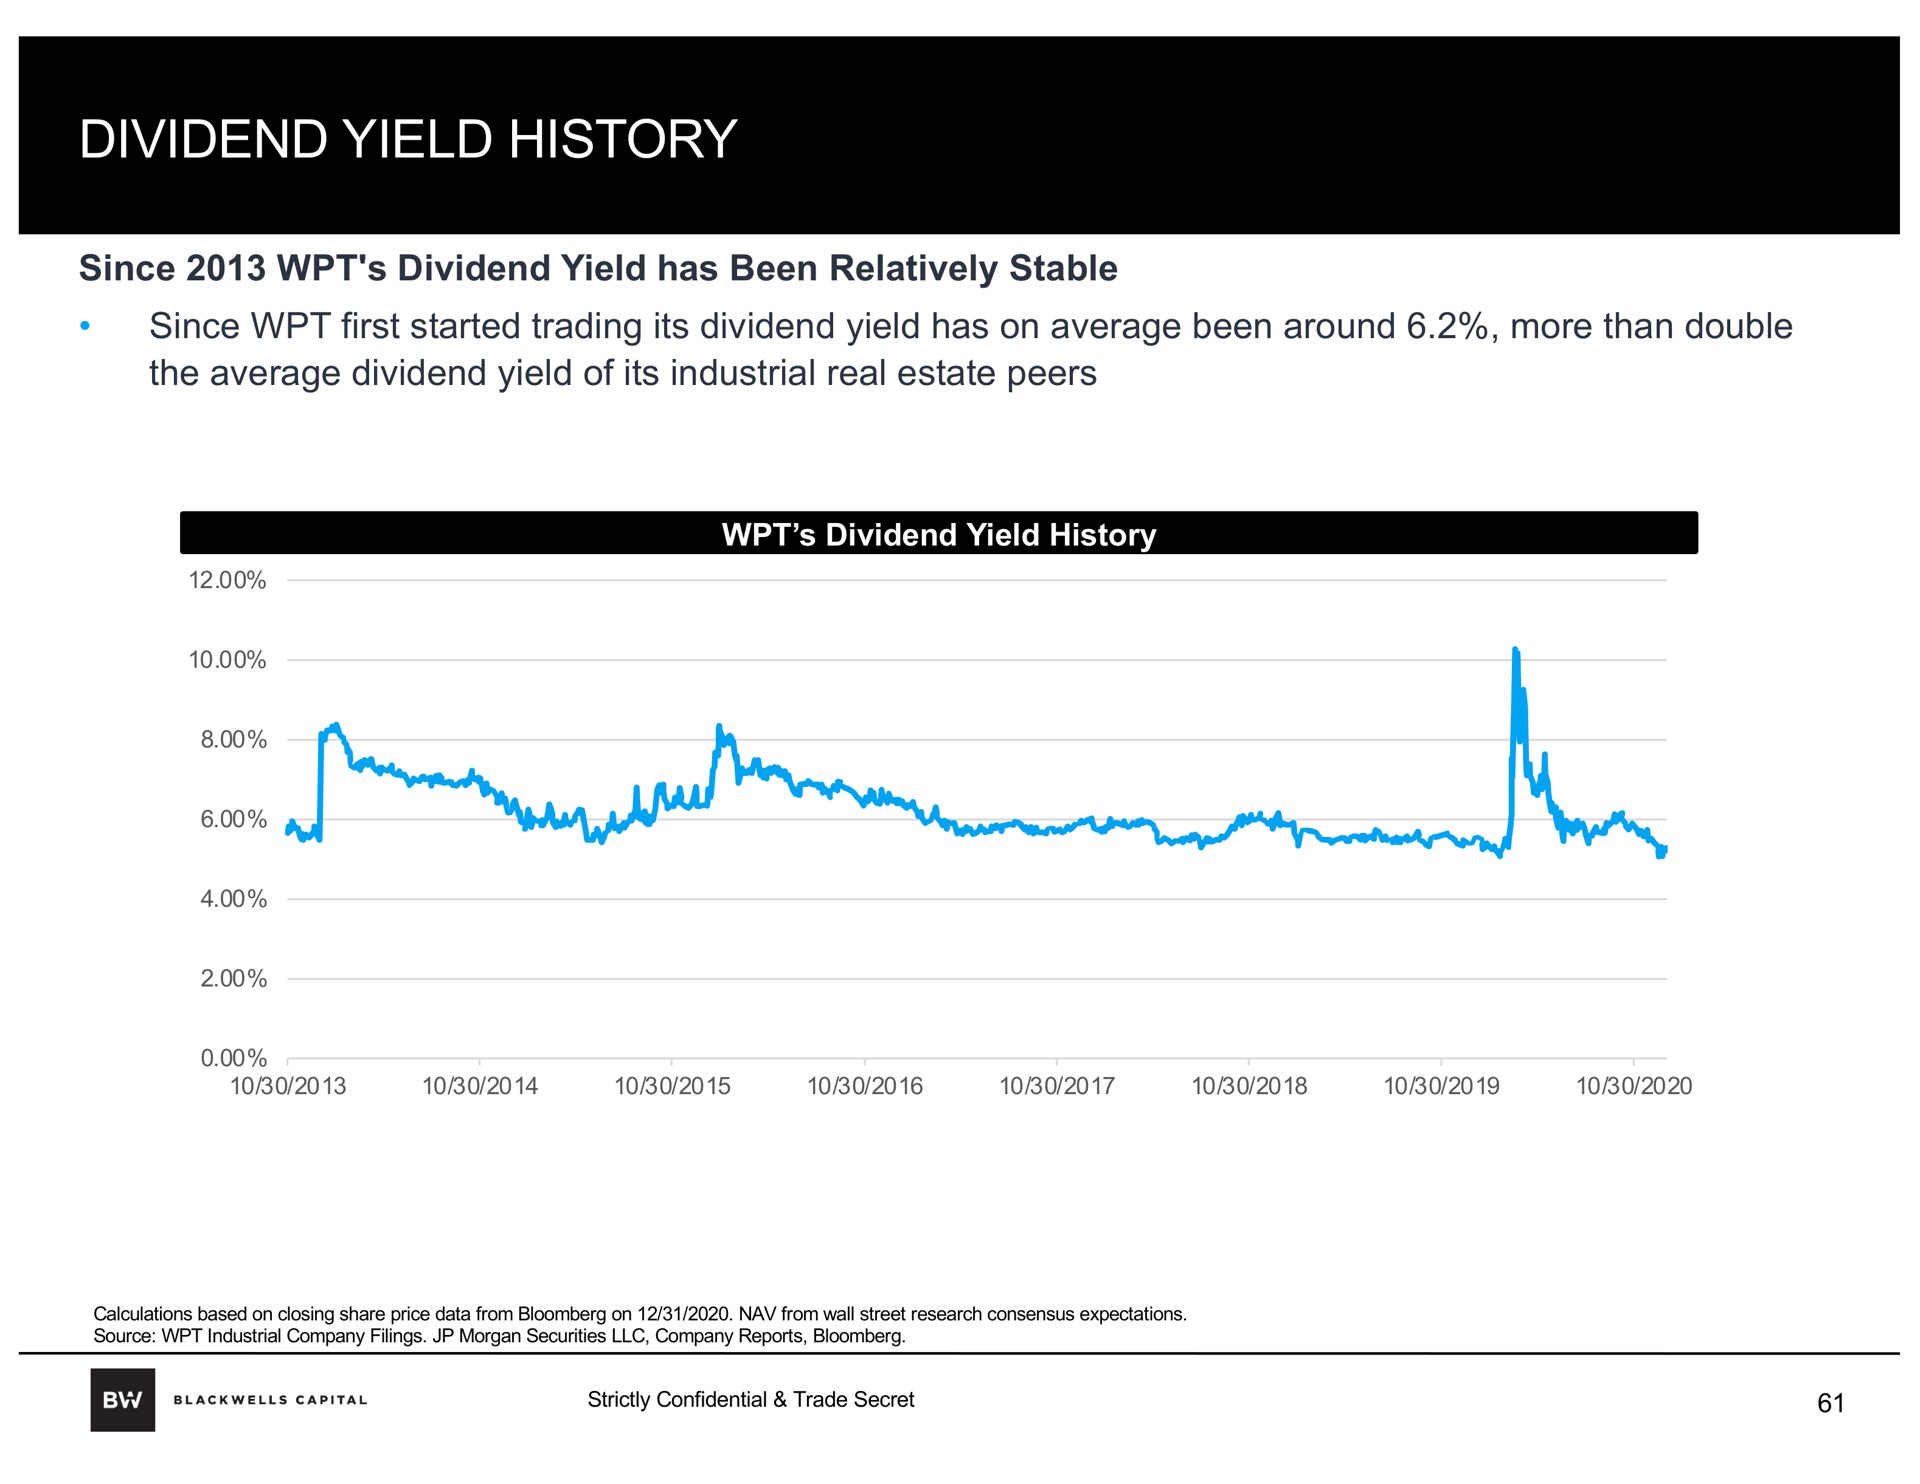 dividend yield history | Blackwells Capital